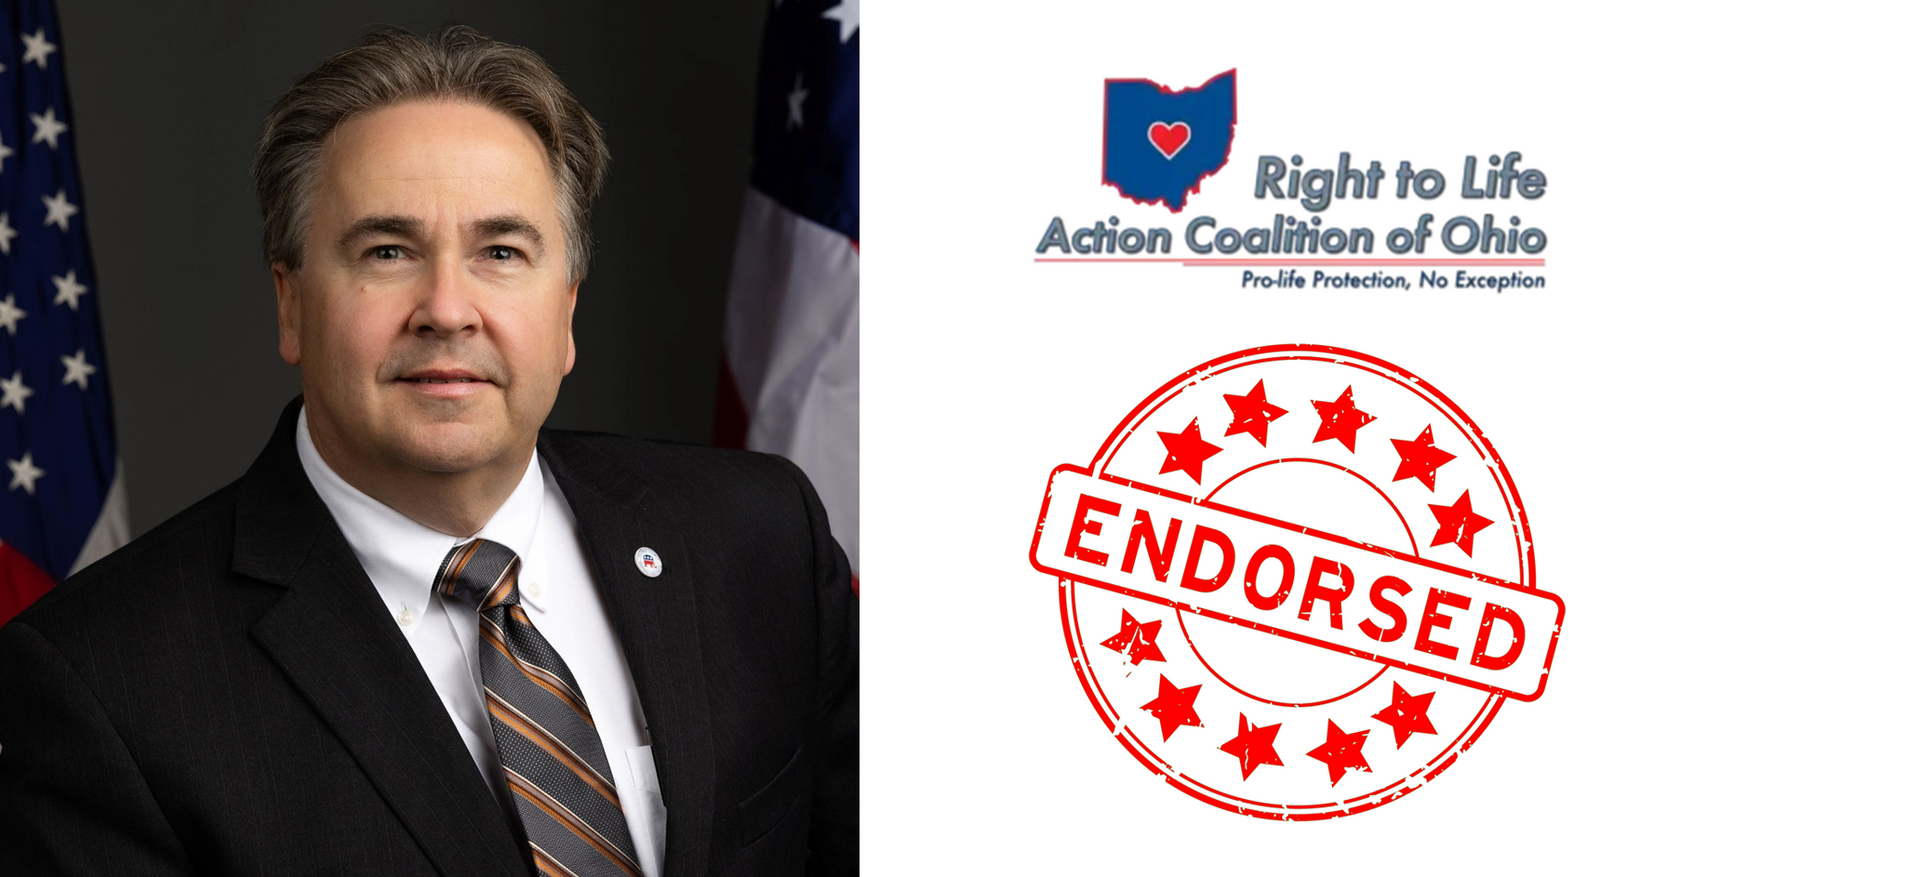 Ohio Right To Life Action Coalition of Ohio Endorsement Tony Schroeder